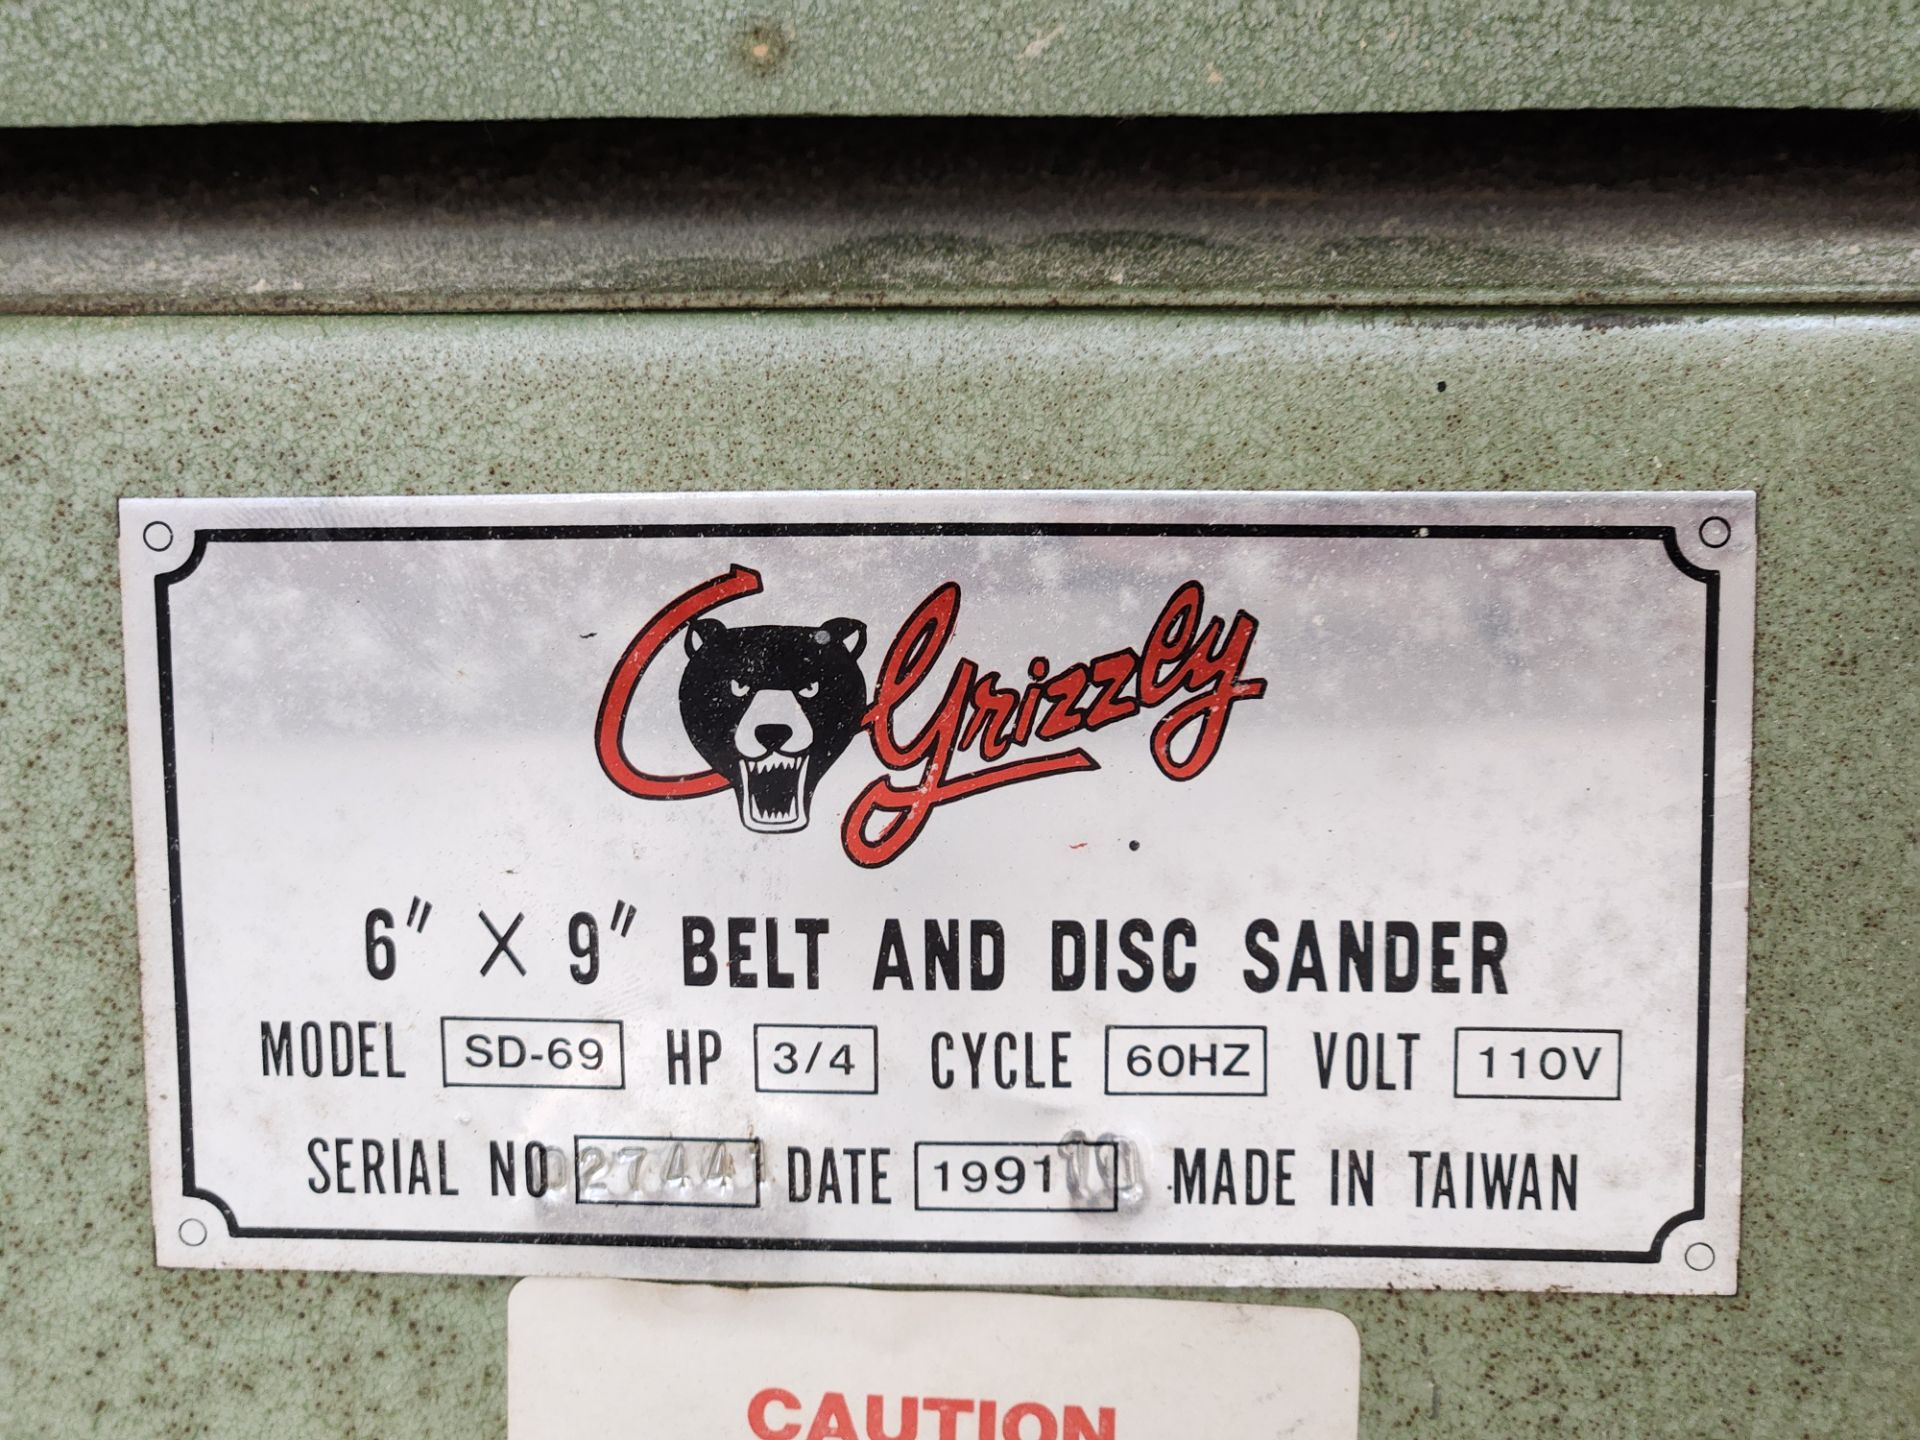 Grizzly 6" x 9" Belt & Disc Sander - Image 2 of 4